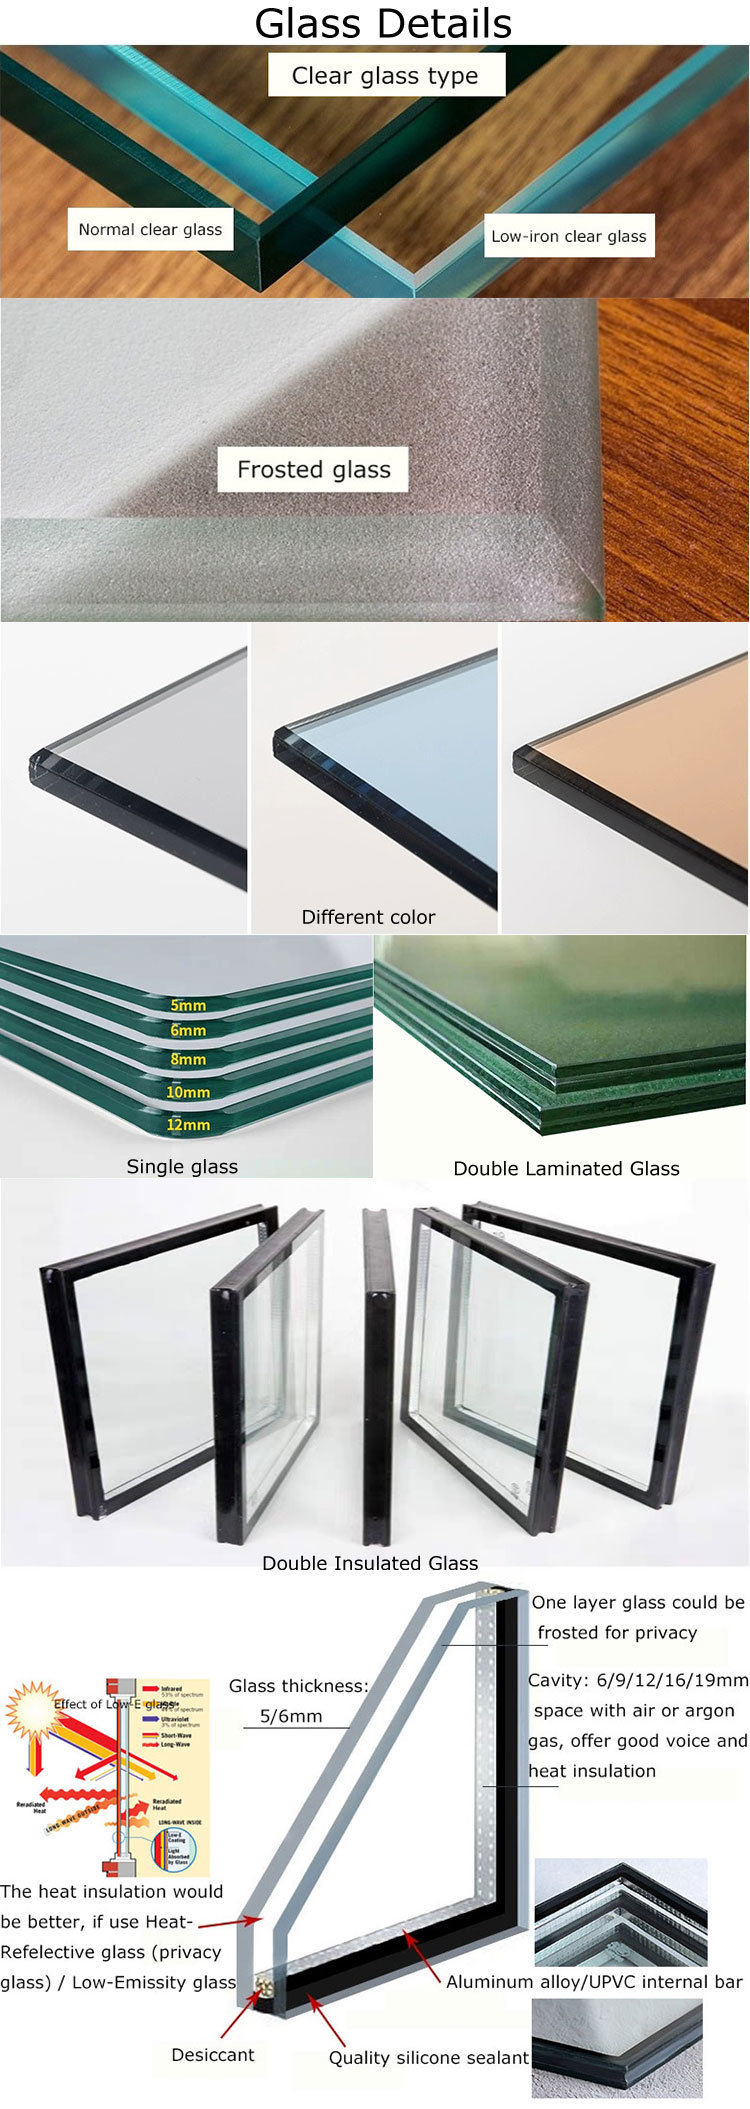 Aluminum Alloy Anti-Noise Glass Hung Window with Fiberglass Mesh